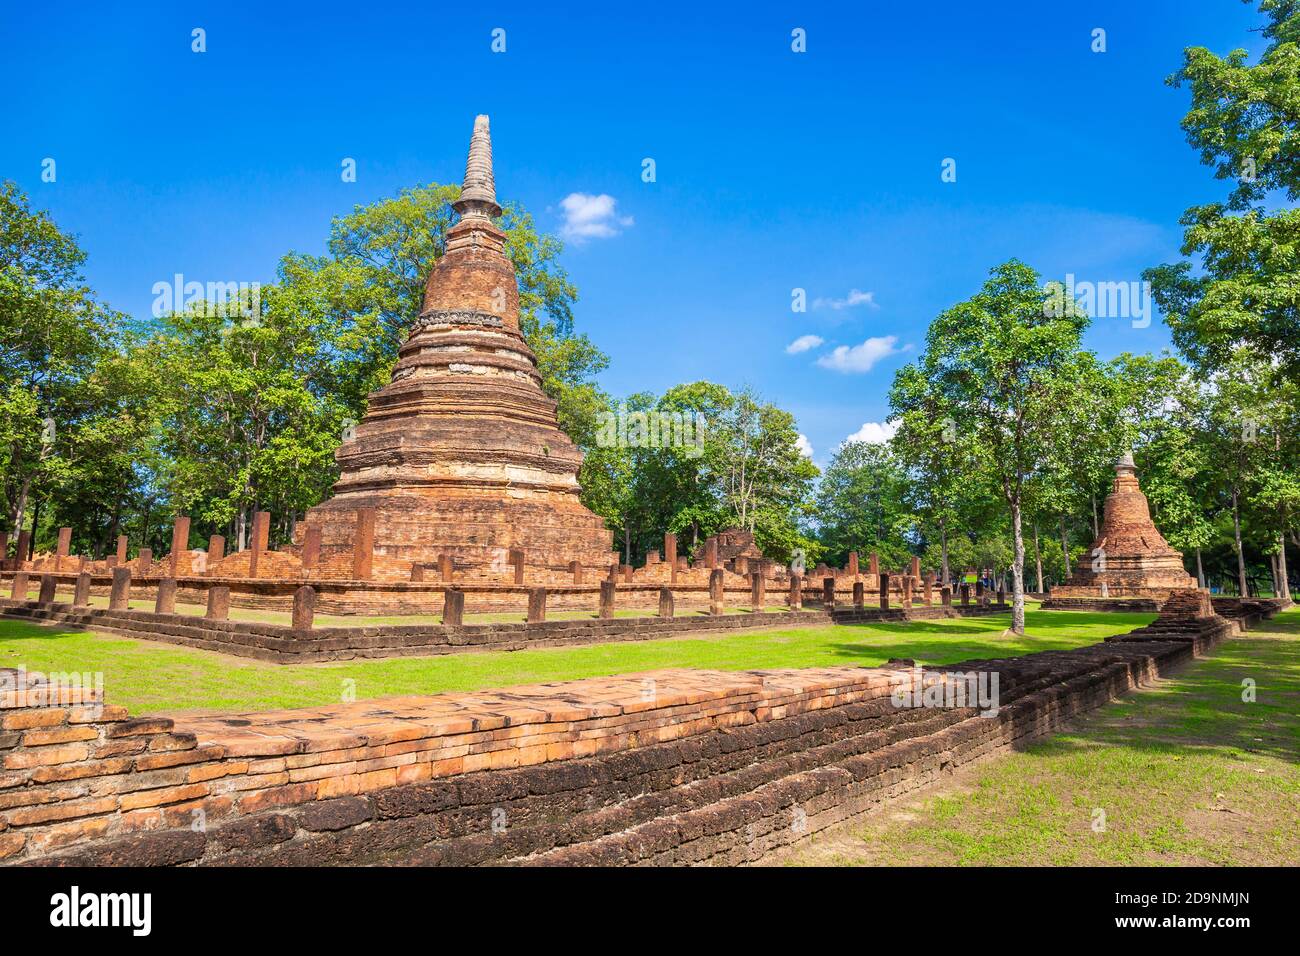 Landmark of old chedi made of ancient bricks in the Kamphaeng Phet Historical Park, Thailand. Stock Photo